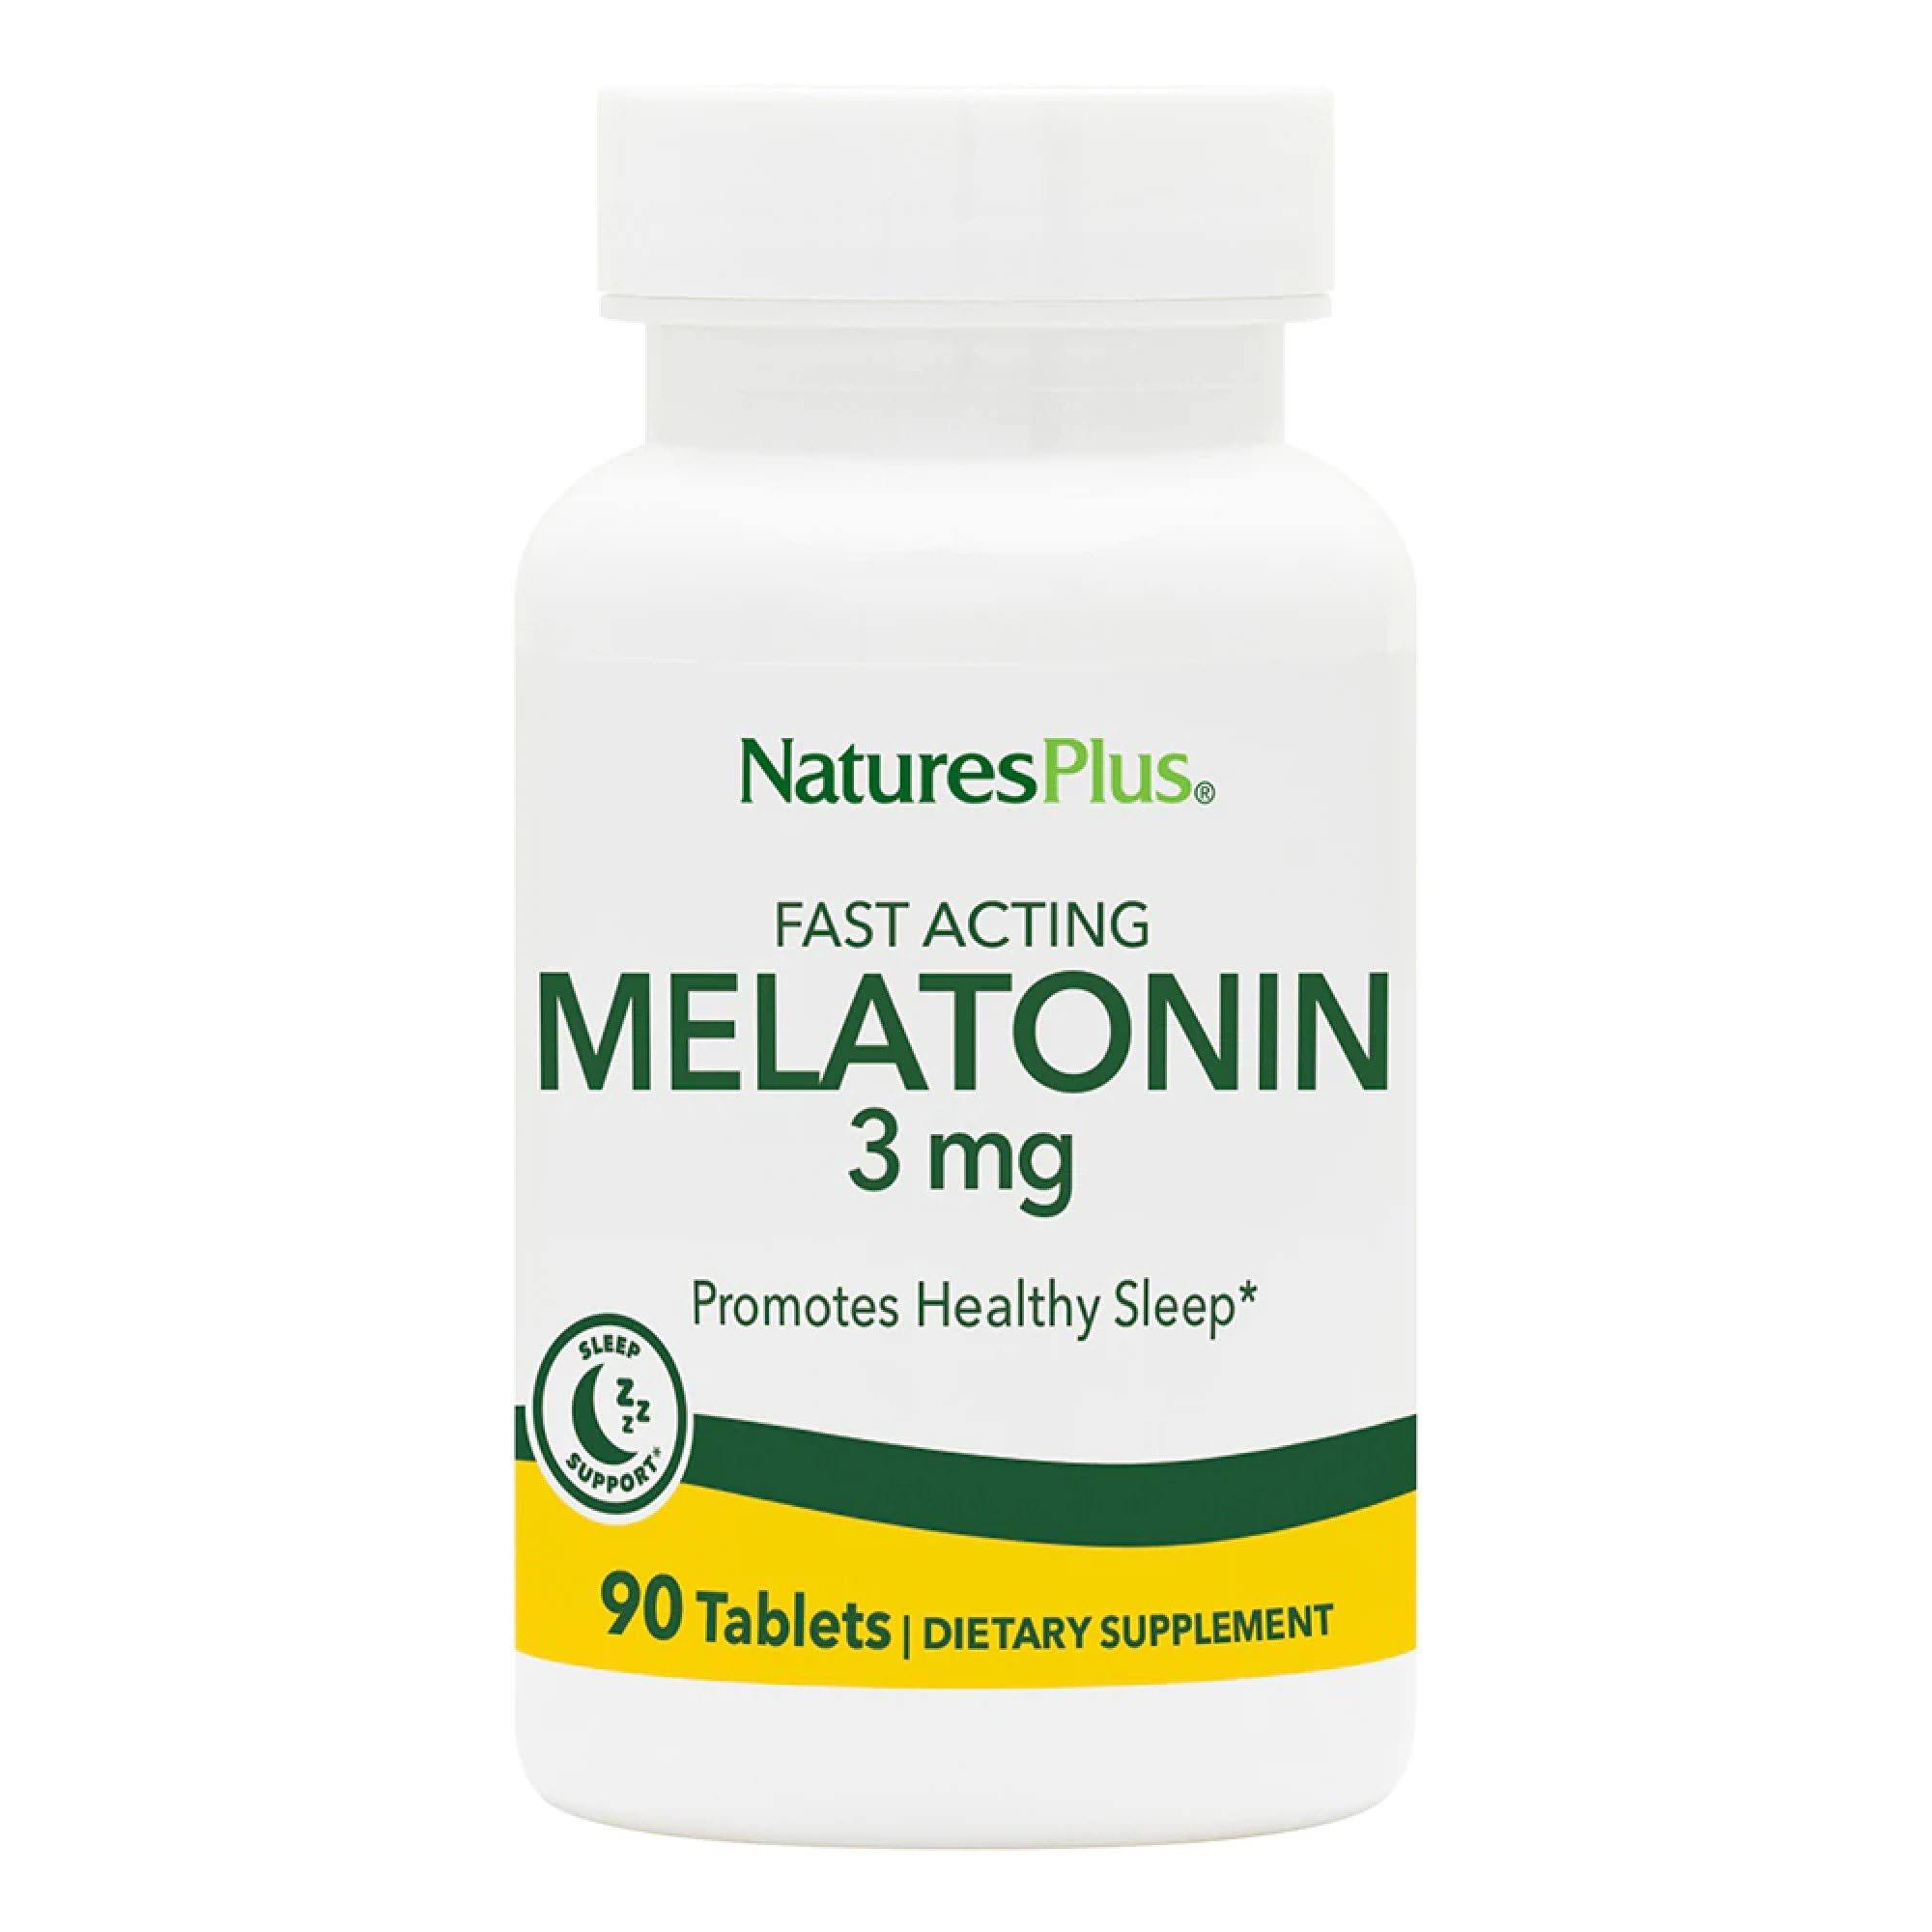 NaturesPlus Melatonin 3 mg - 90 Tablets